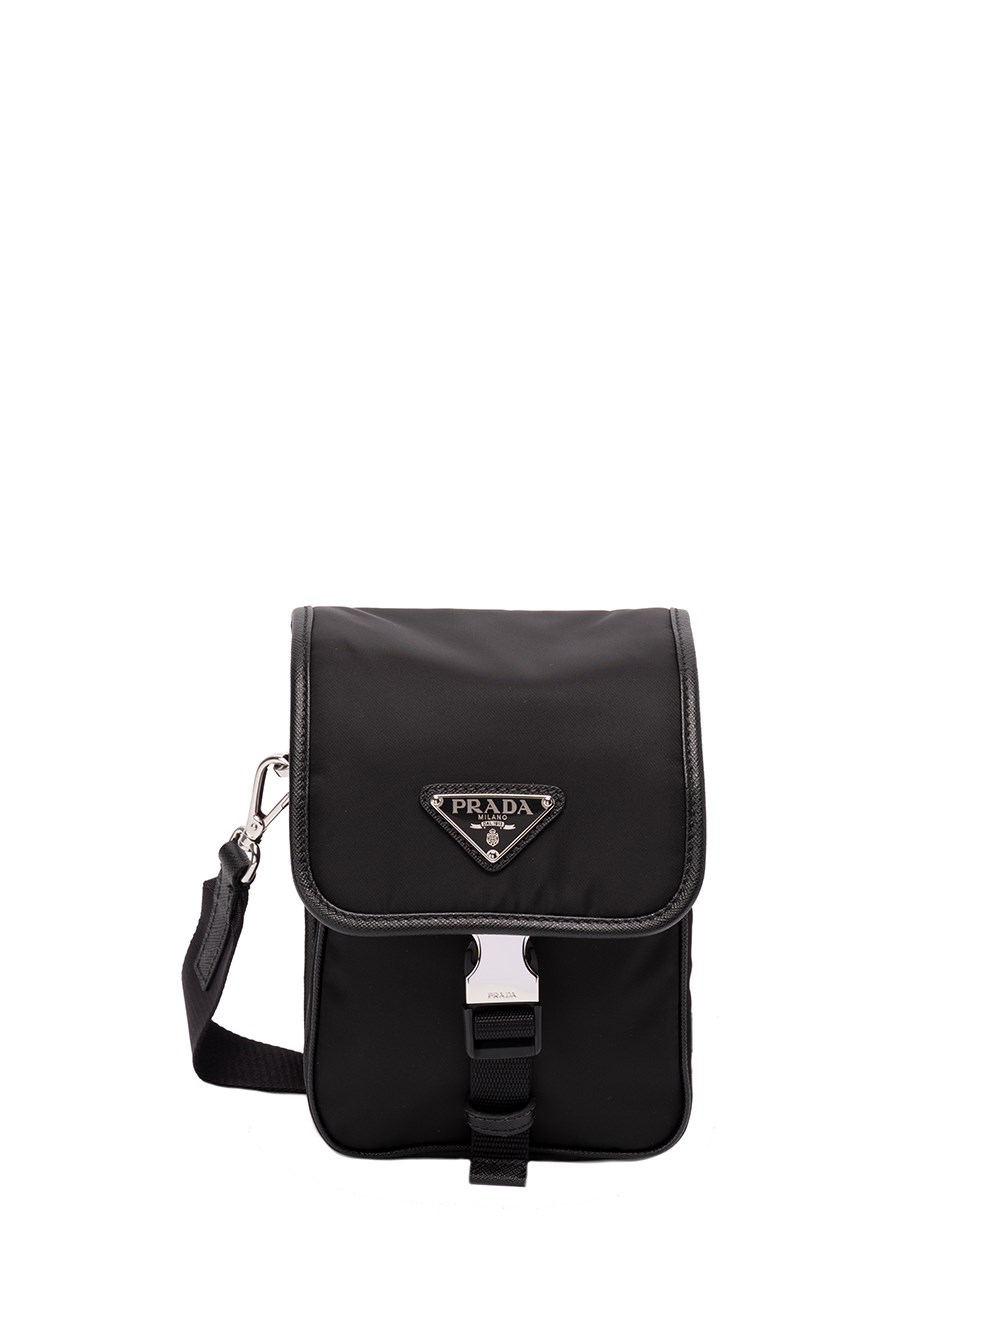 Prada Saffiano Leather Messenger Bag With Pouch - F0002 Nero